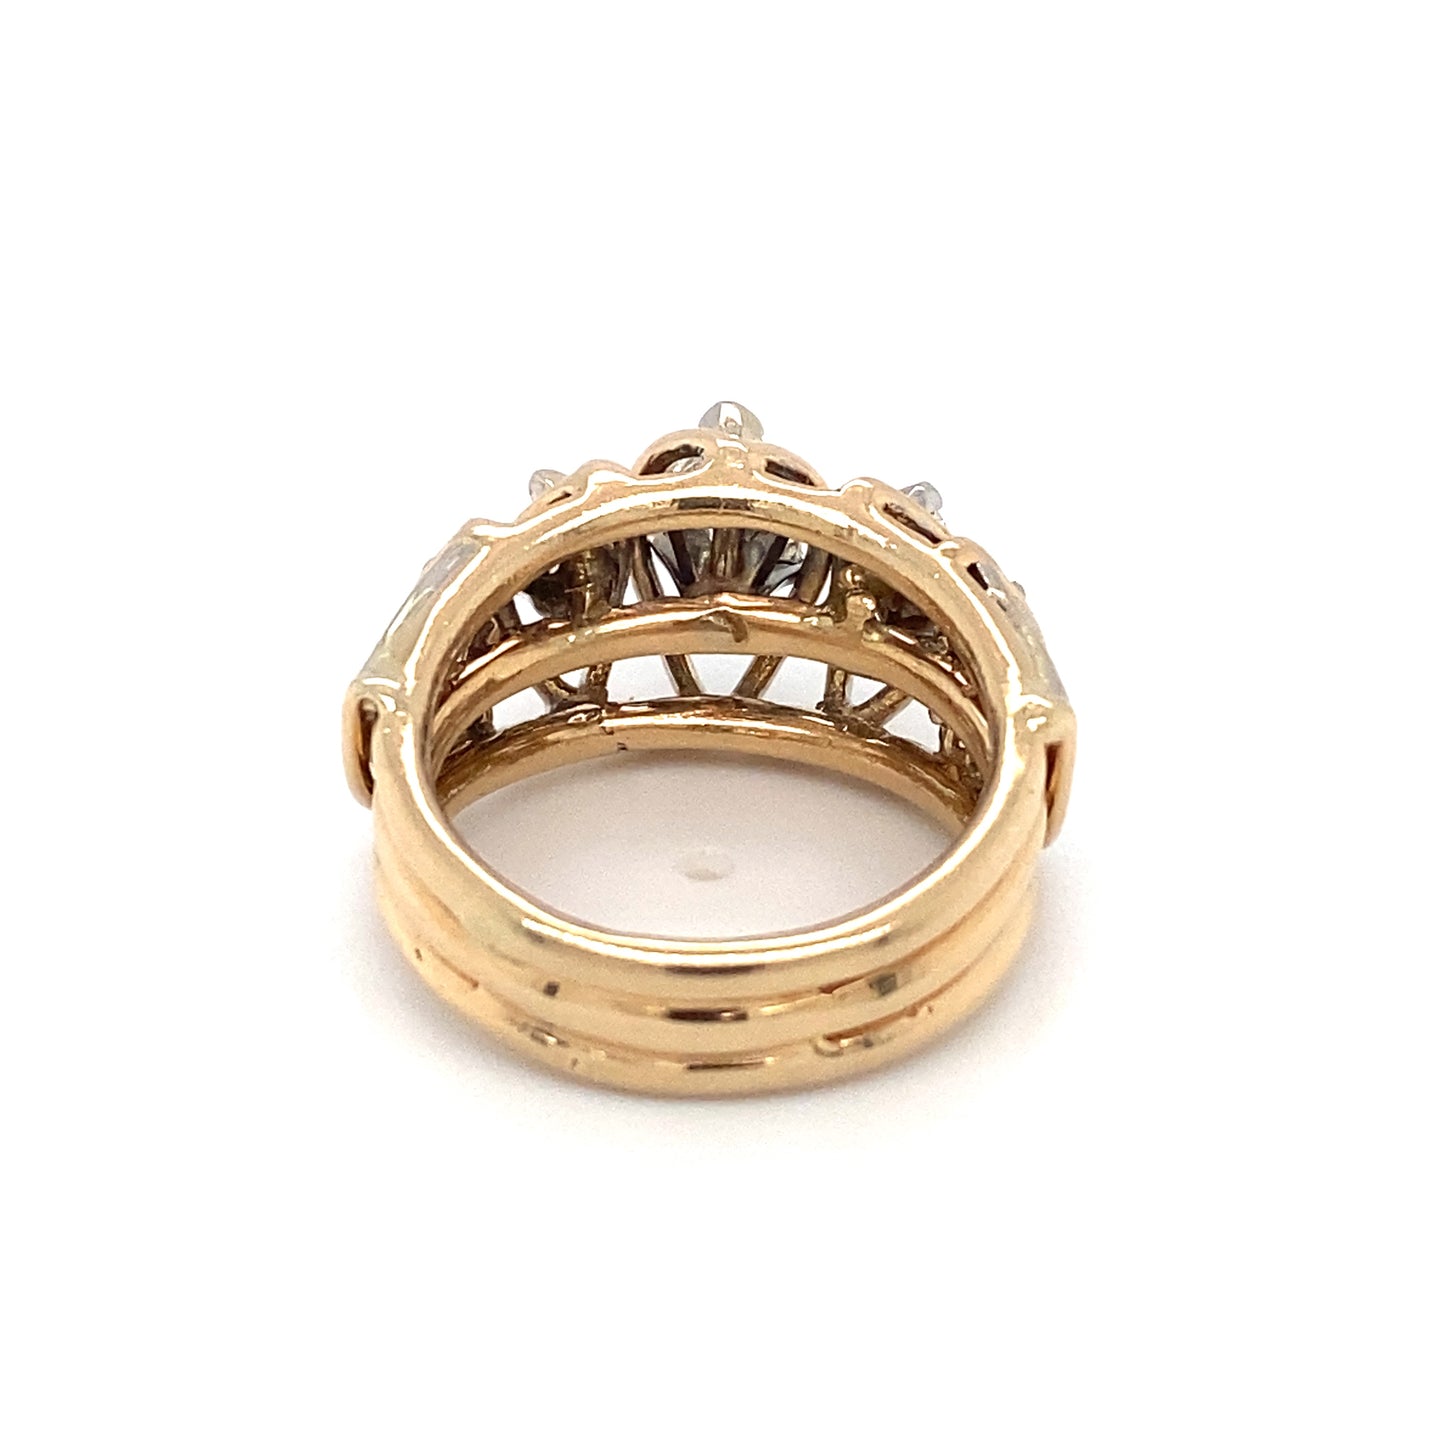 Circa 1970s 1.60ct Marquise Diamond Retro Ring in 14K Gold